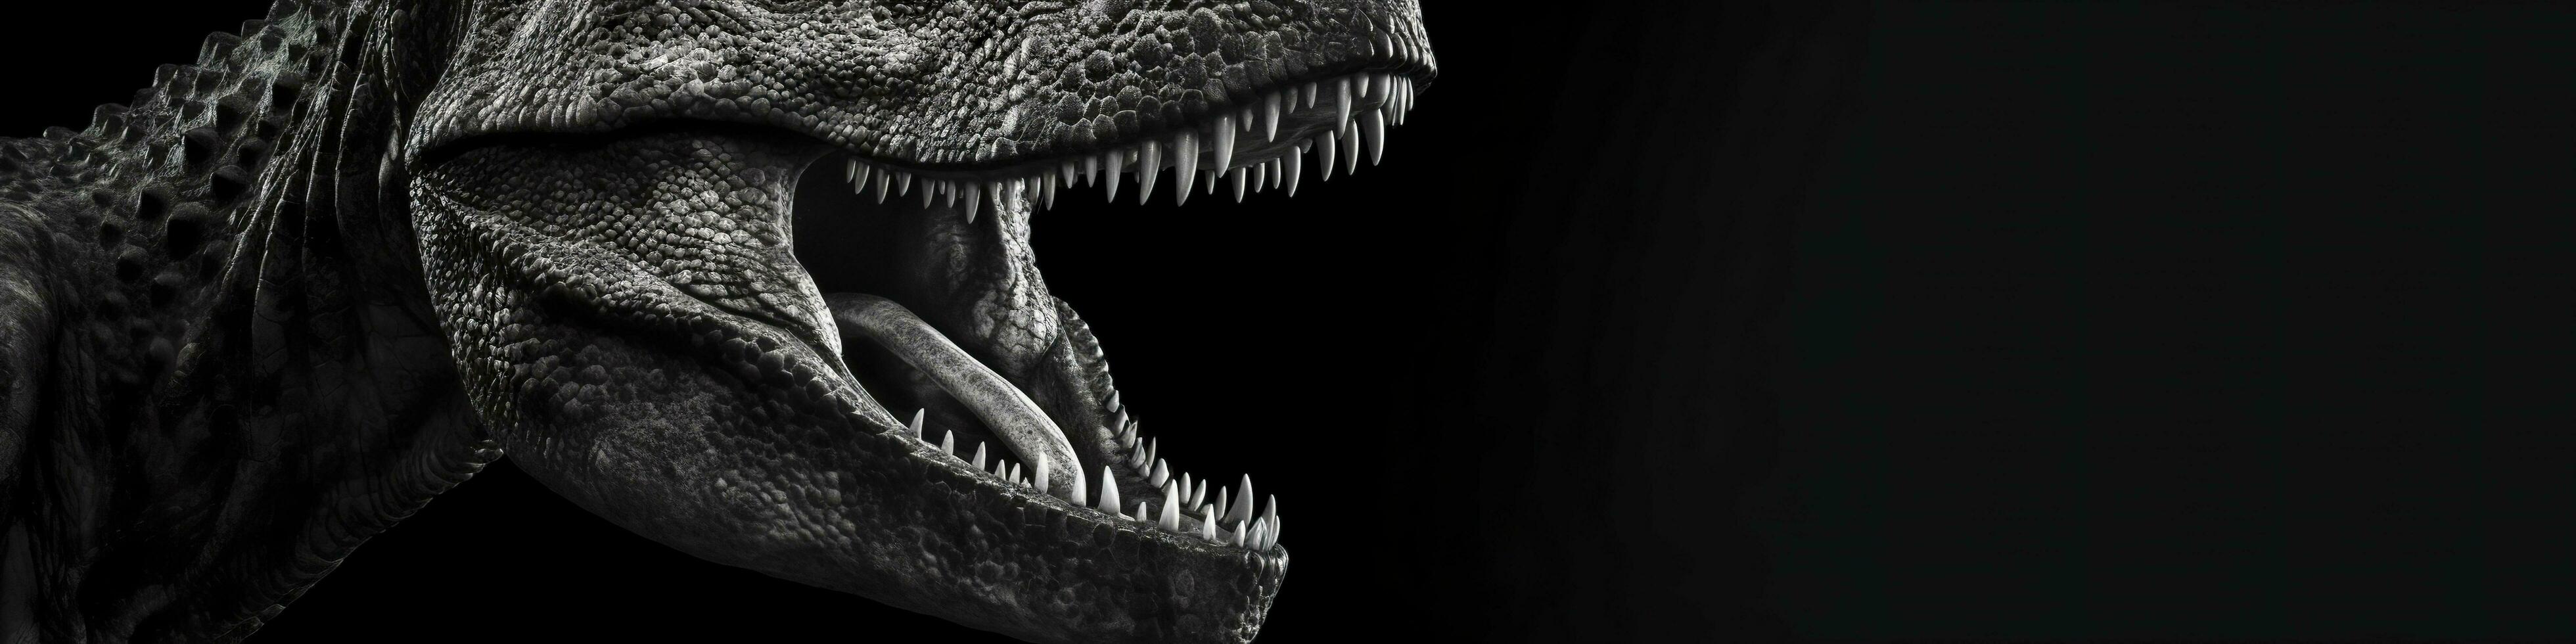 Black and white photorealistic studio portrait of a Tyrannosaurus Rex on black background. Generative AI photo